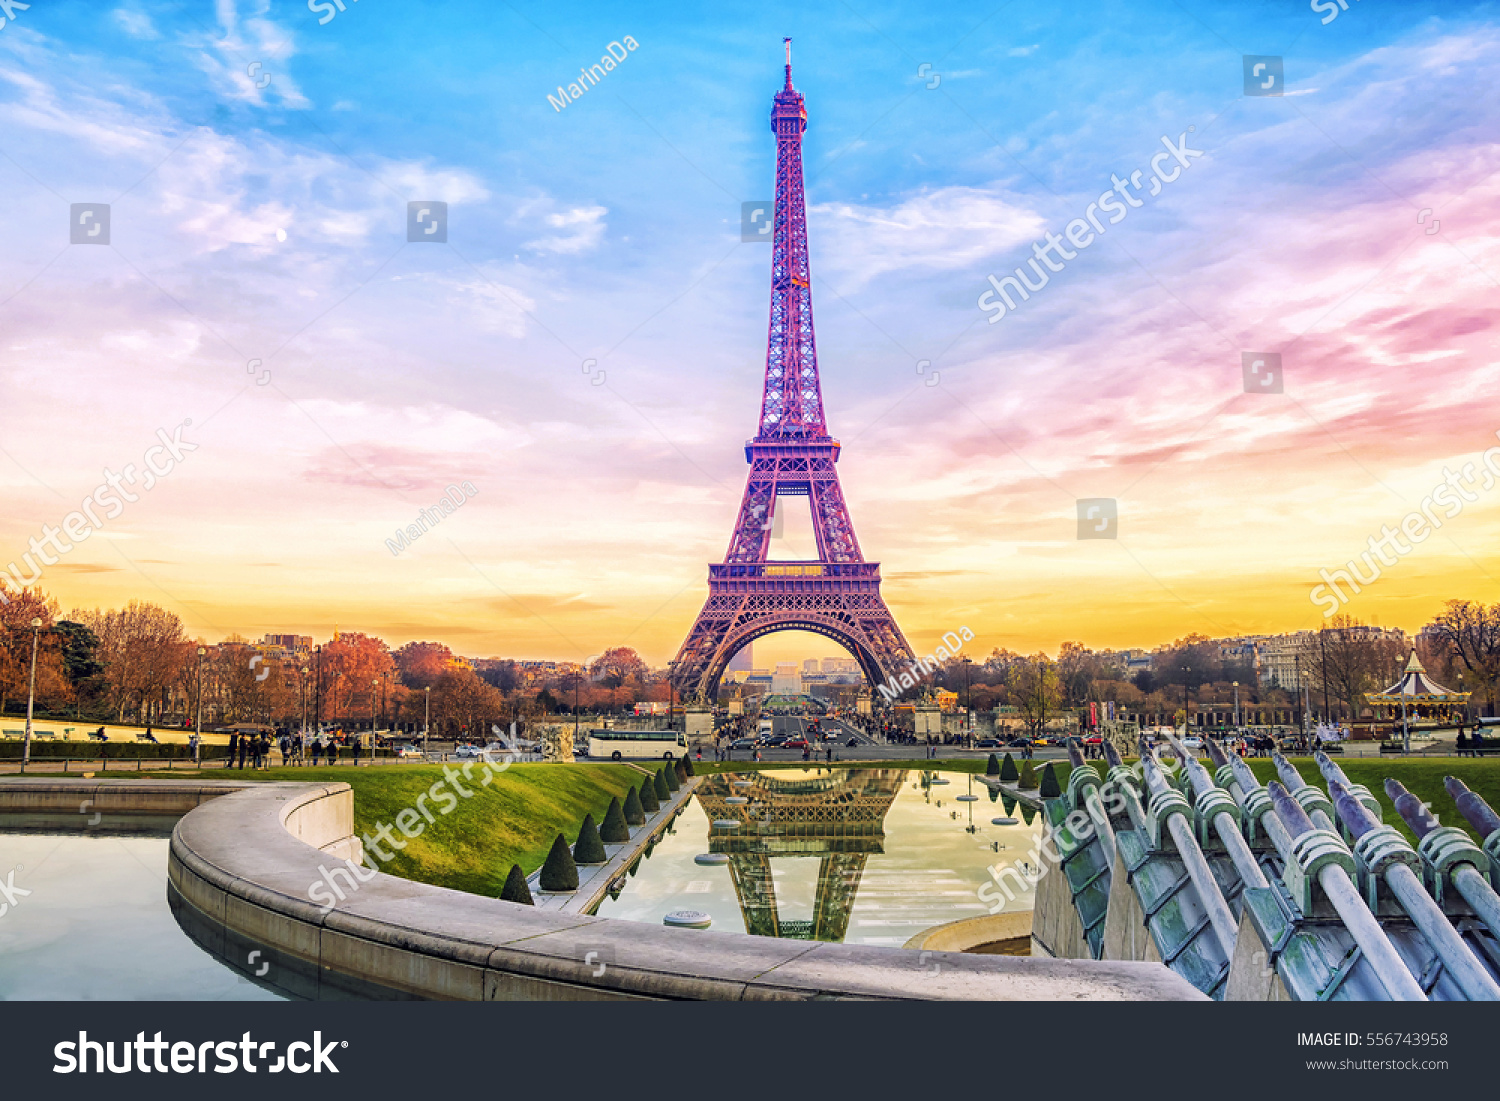 Eiffel Tower Sunset Paris France Romantic Stock Photo 556743958